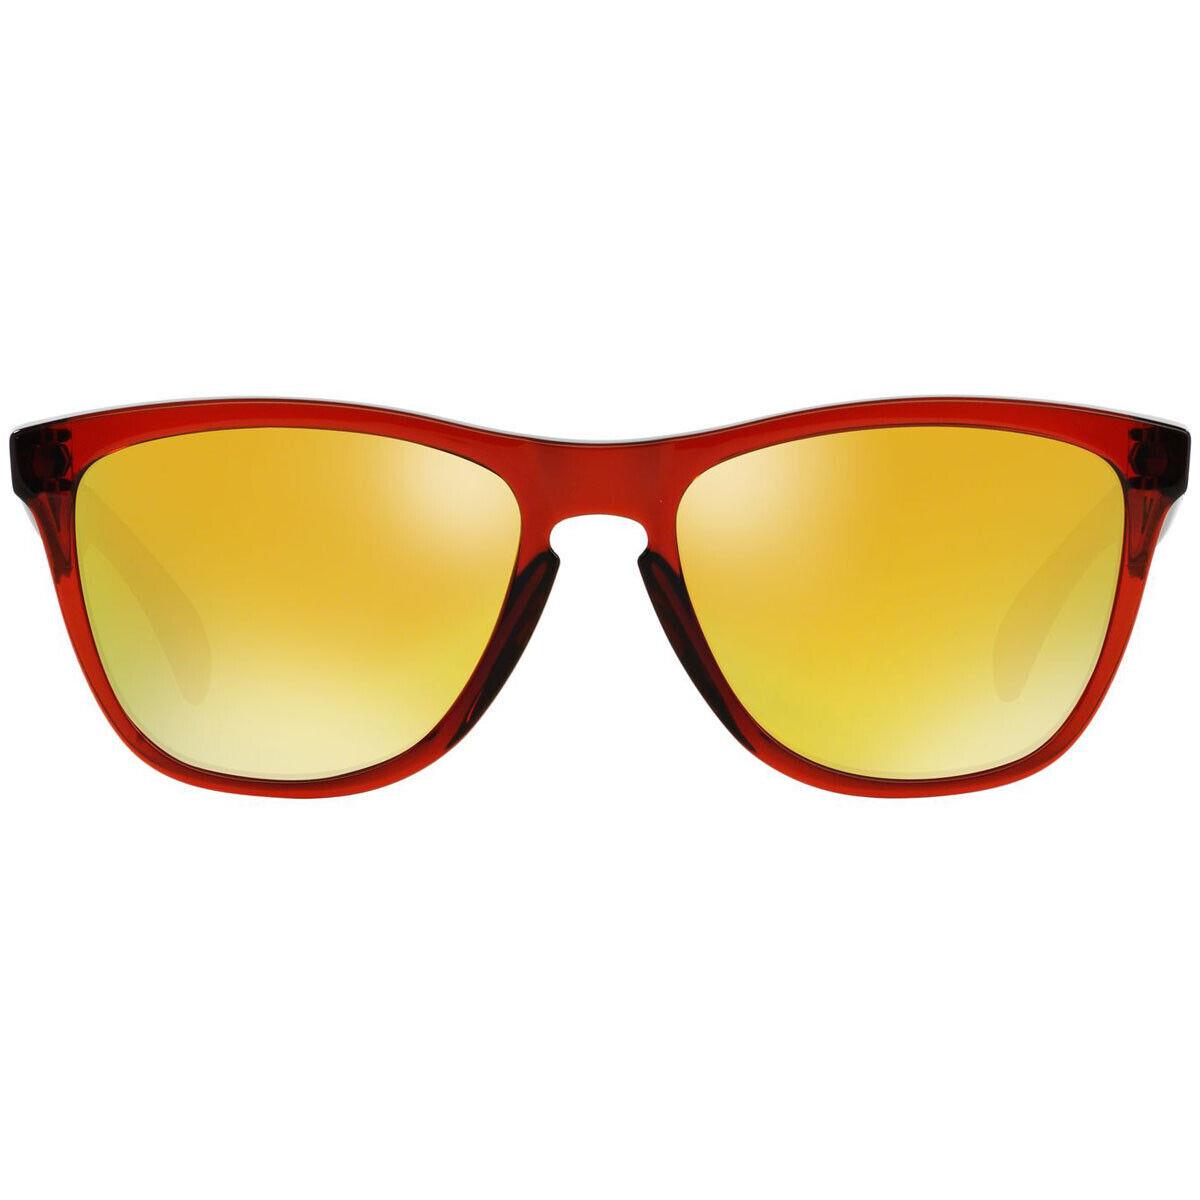 Oakley sunglasses Frogskins - Frame: , Lens: 1